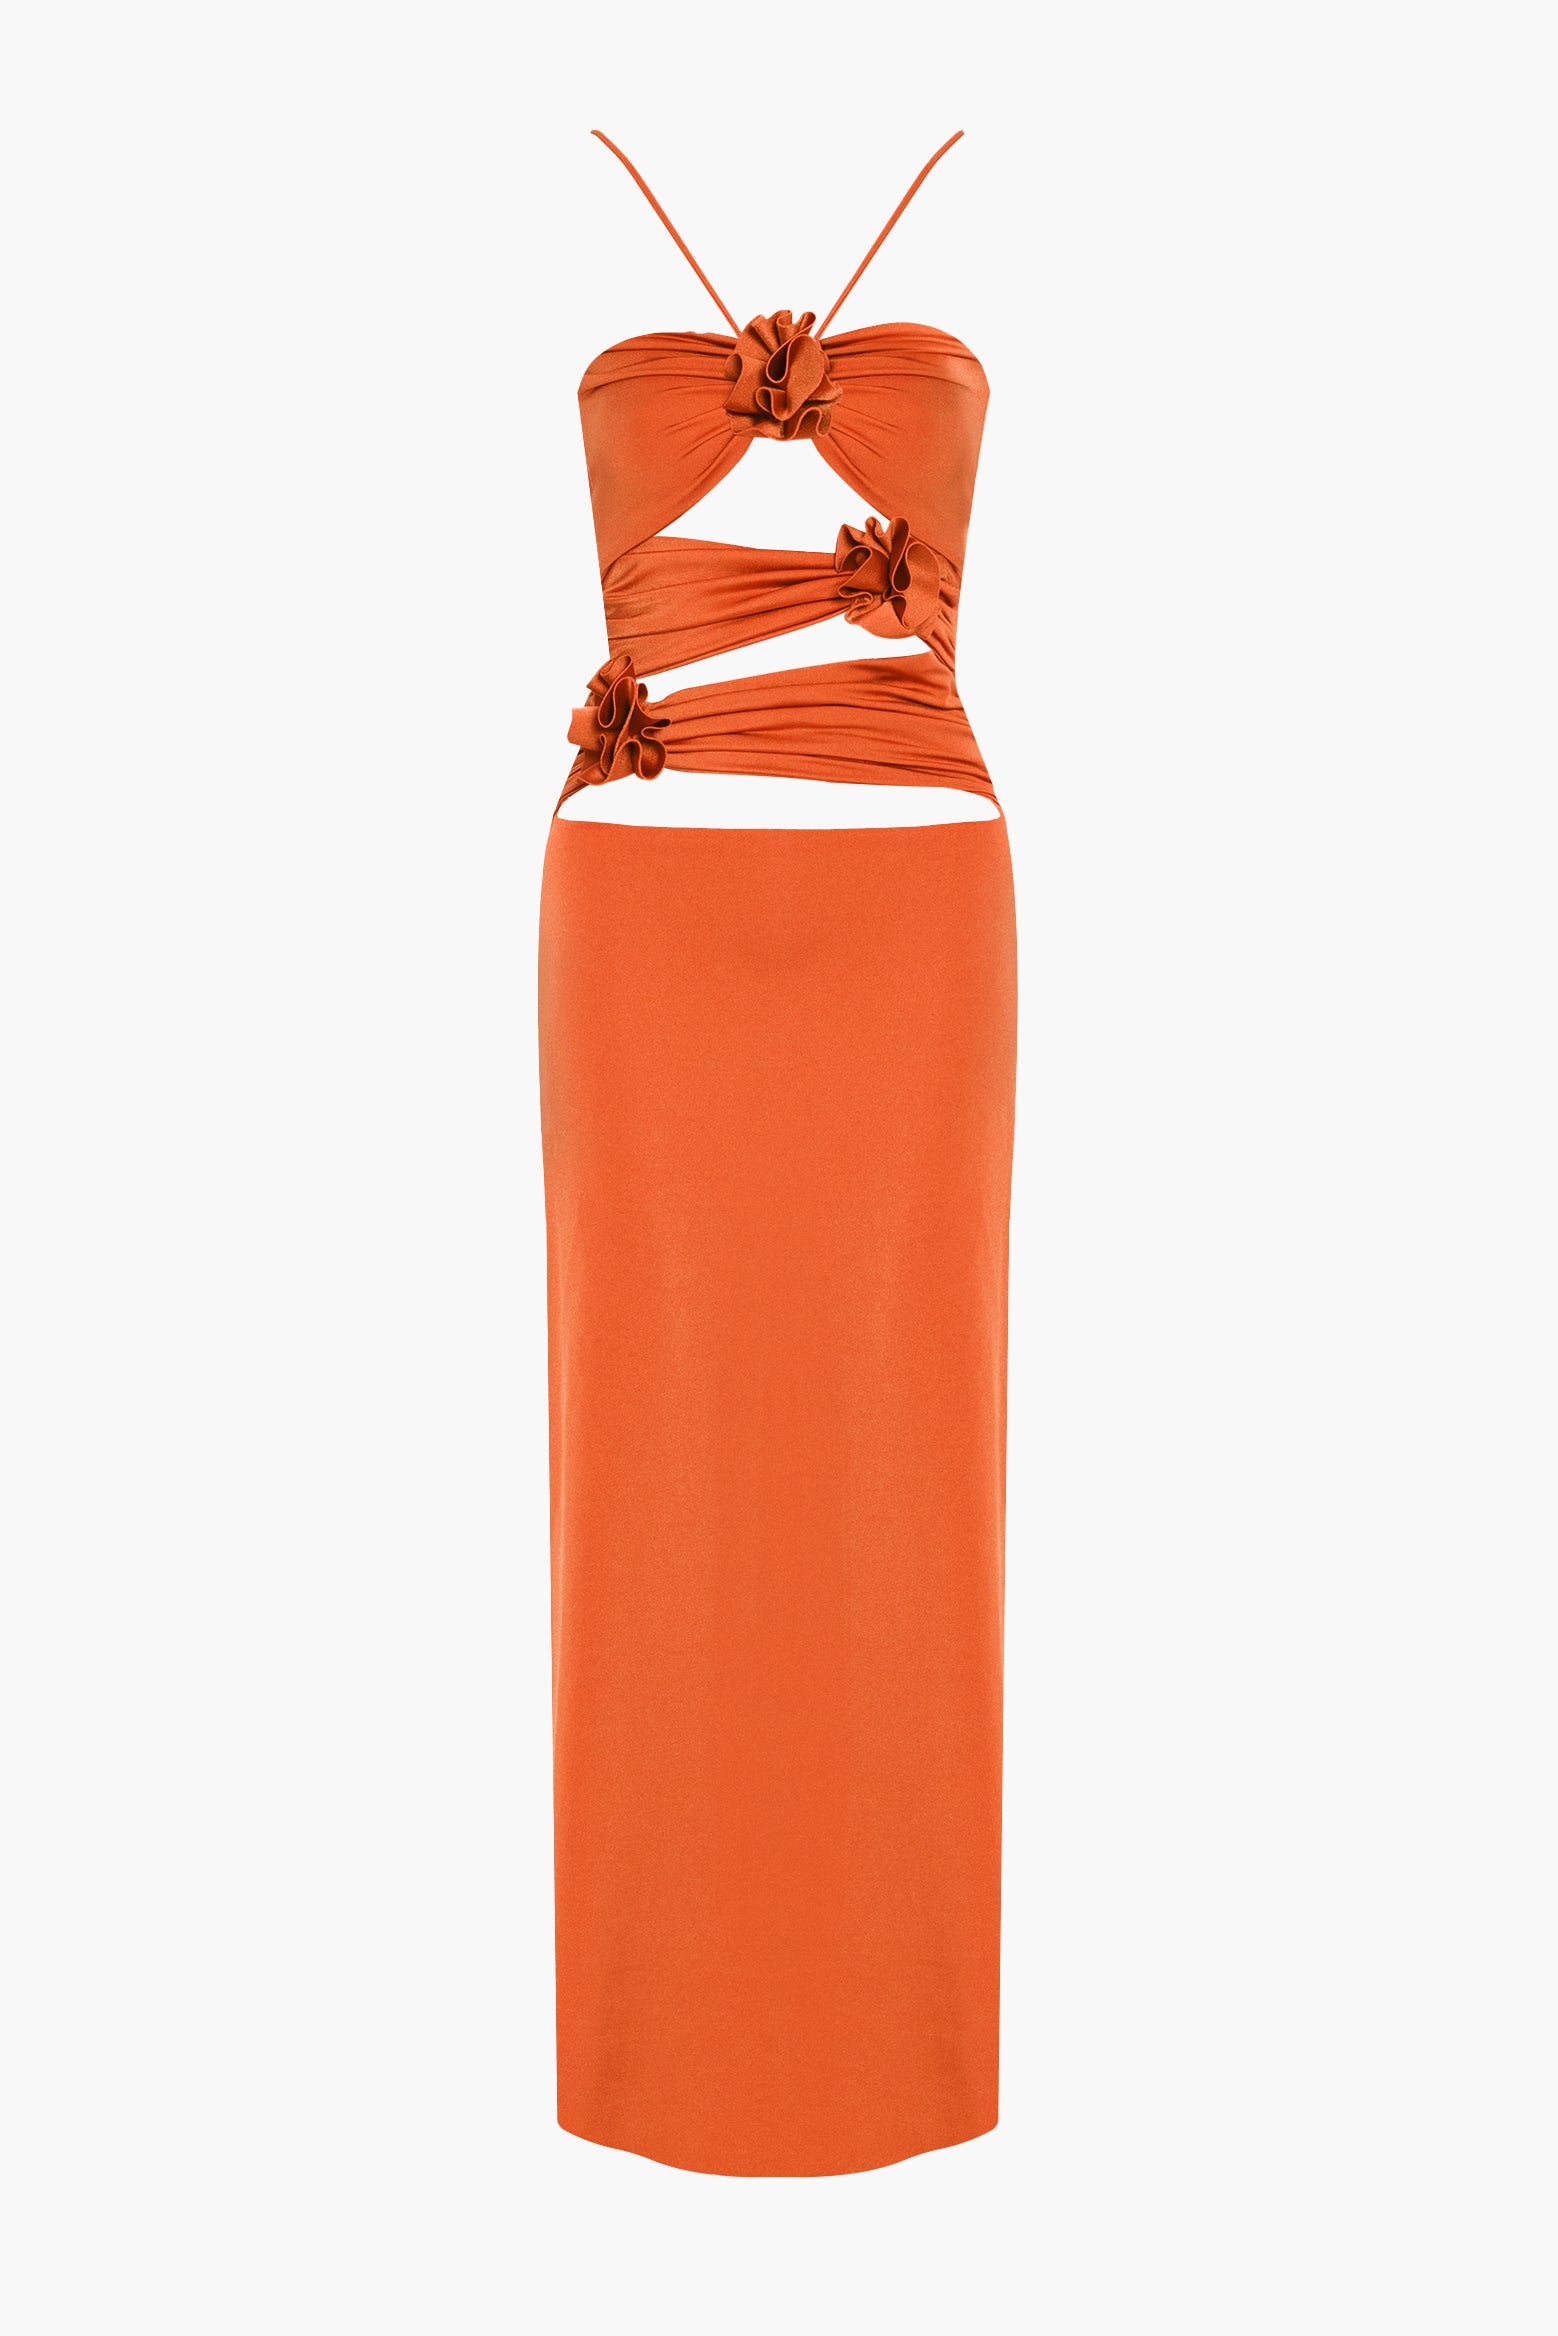 Maygel Coronel Veranera Dress in Orange available at The New Trend Australia.